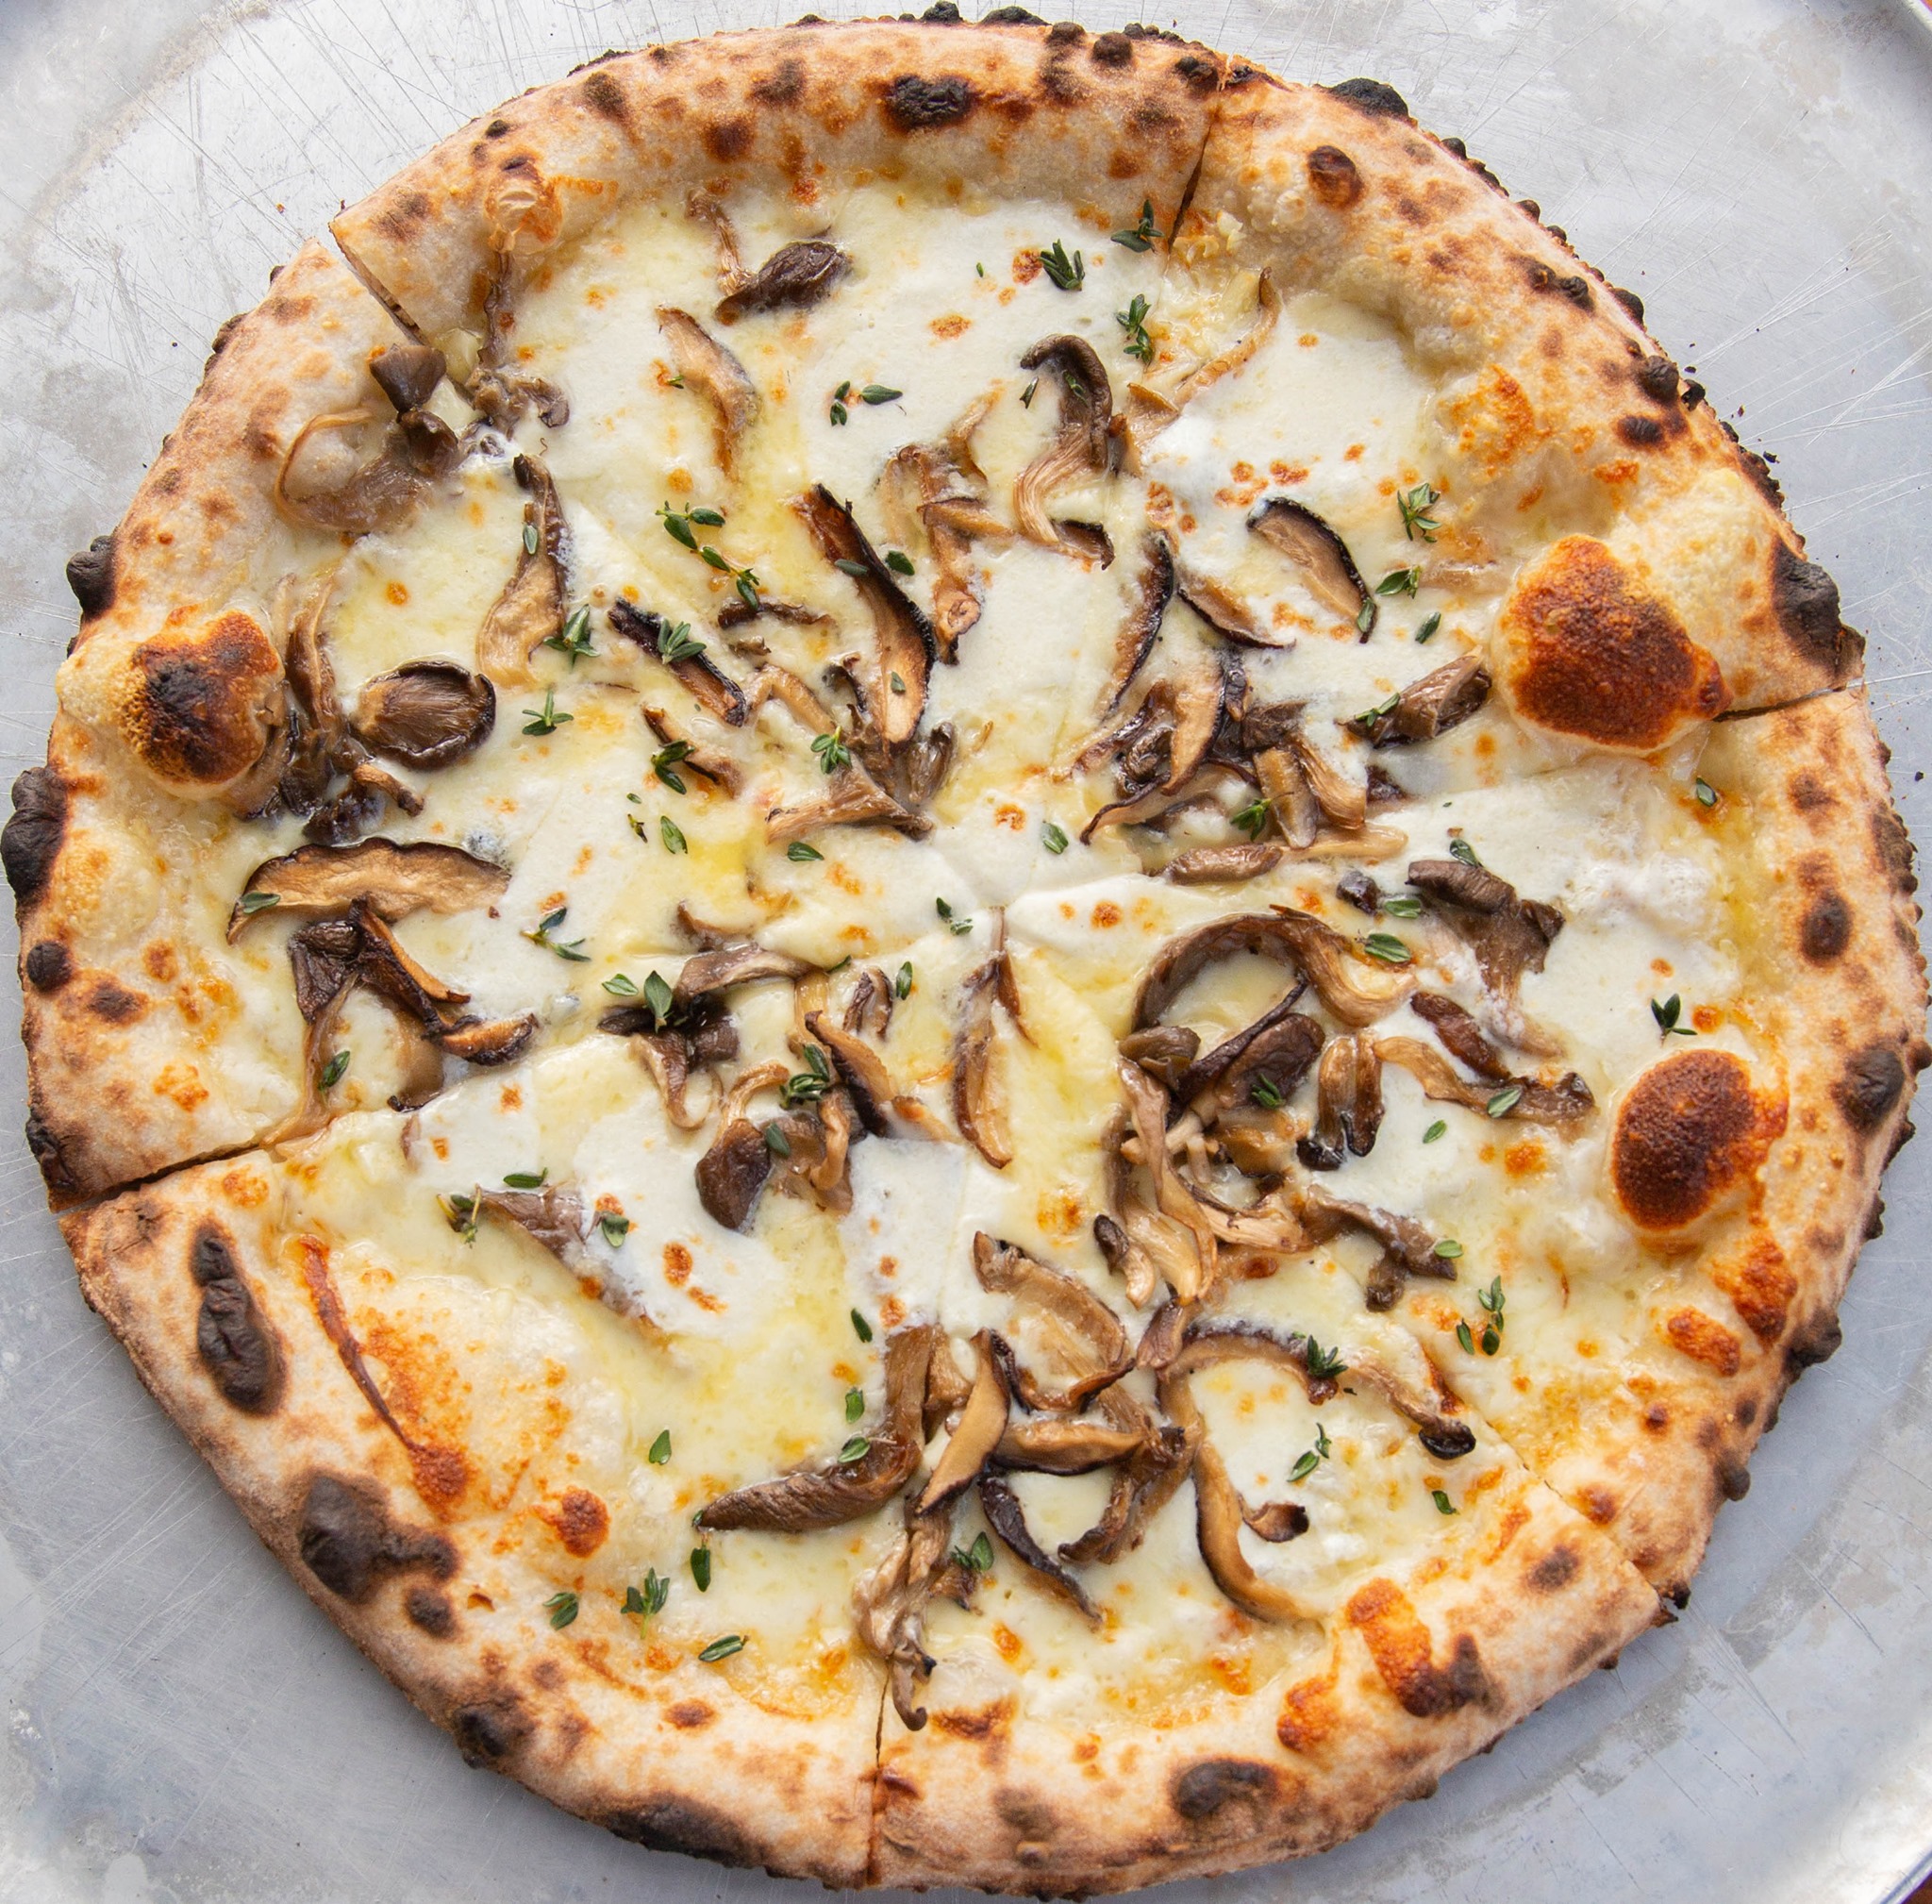 A delicious mushroom pizza from Ken's Artisan Pizza in Portland Oregon.